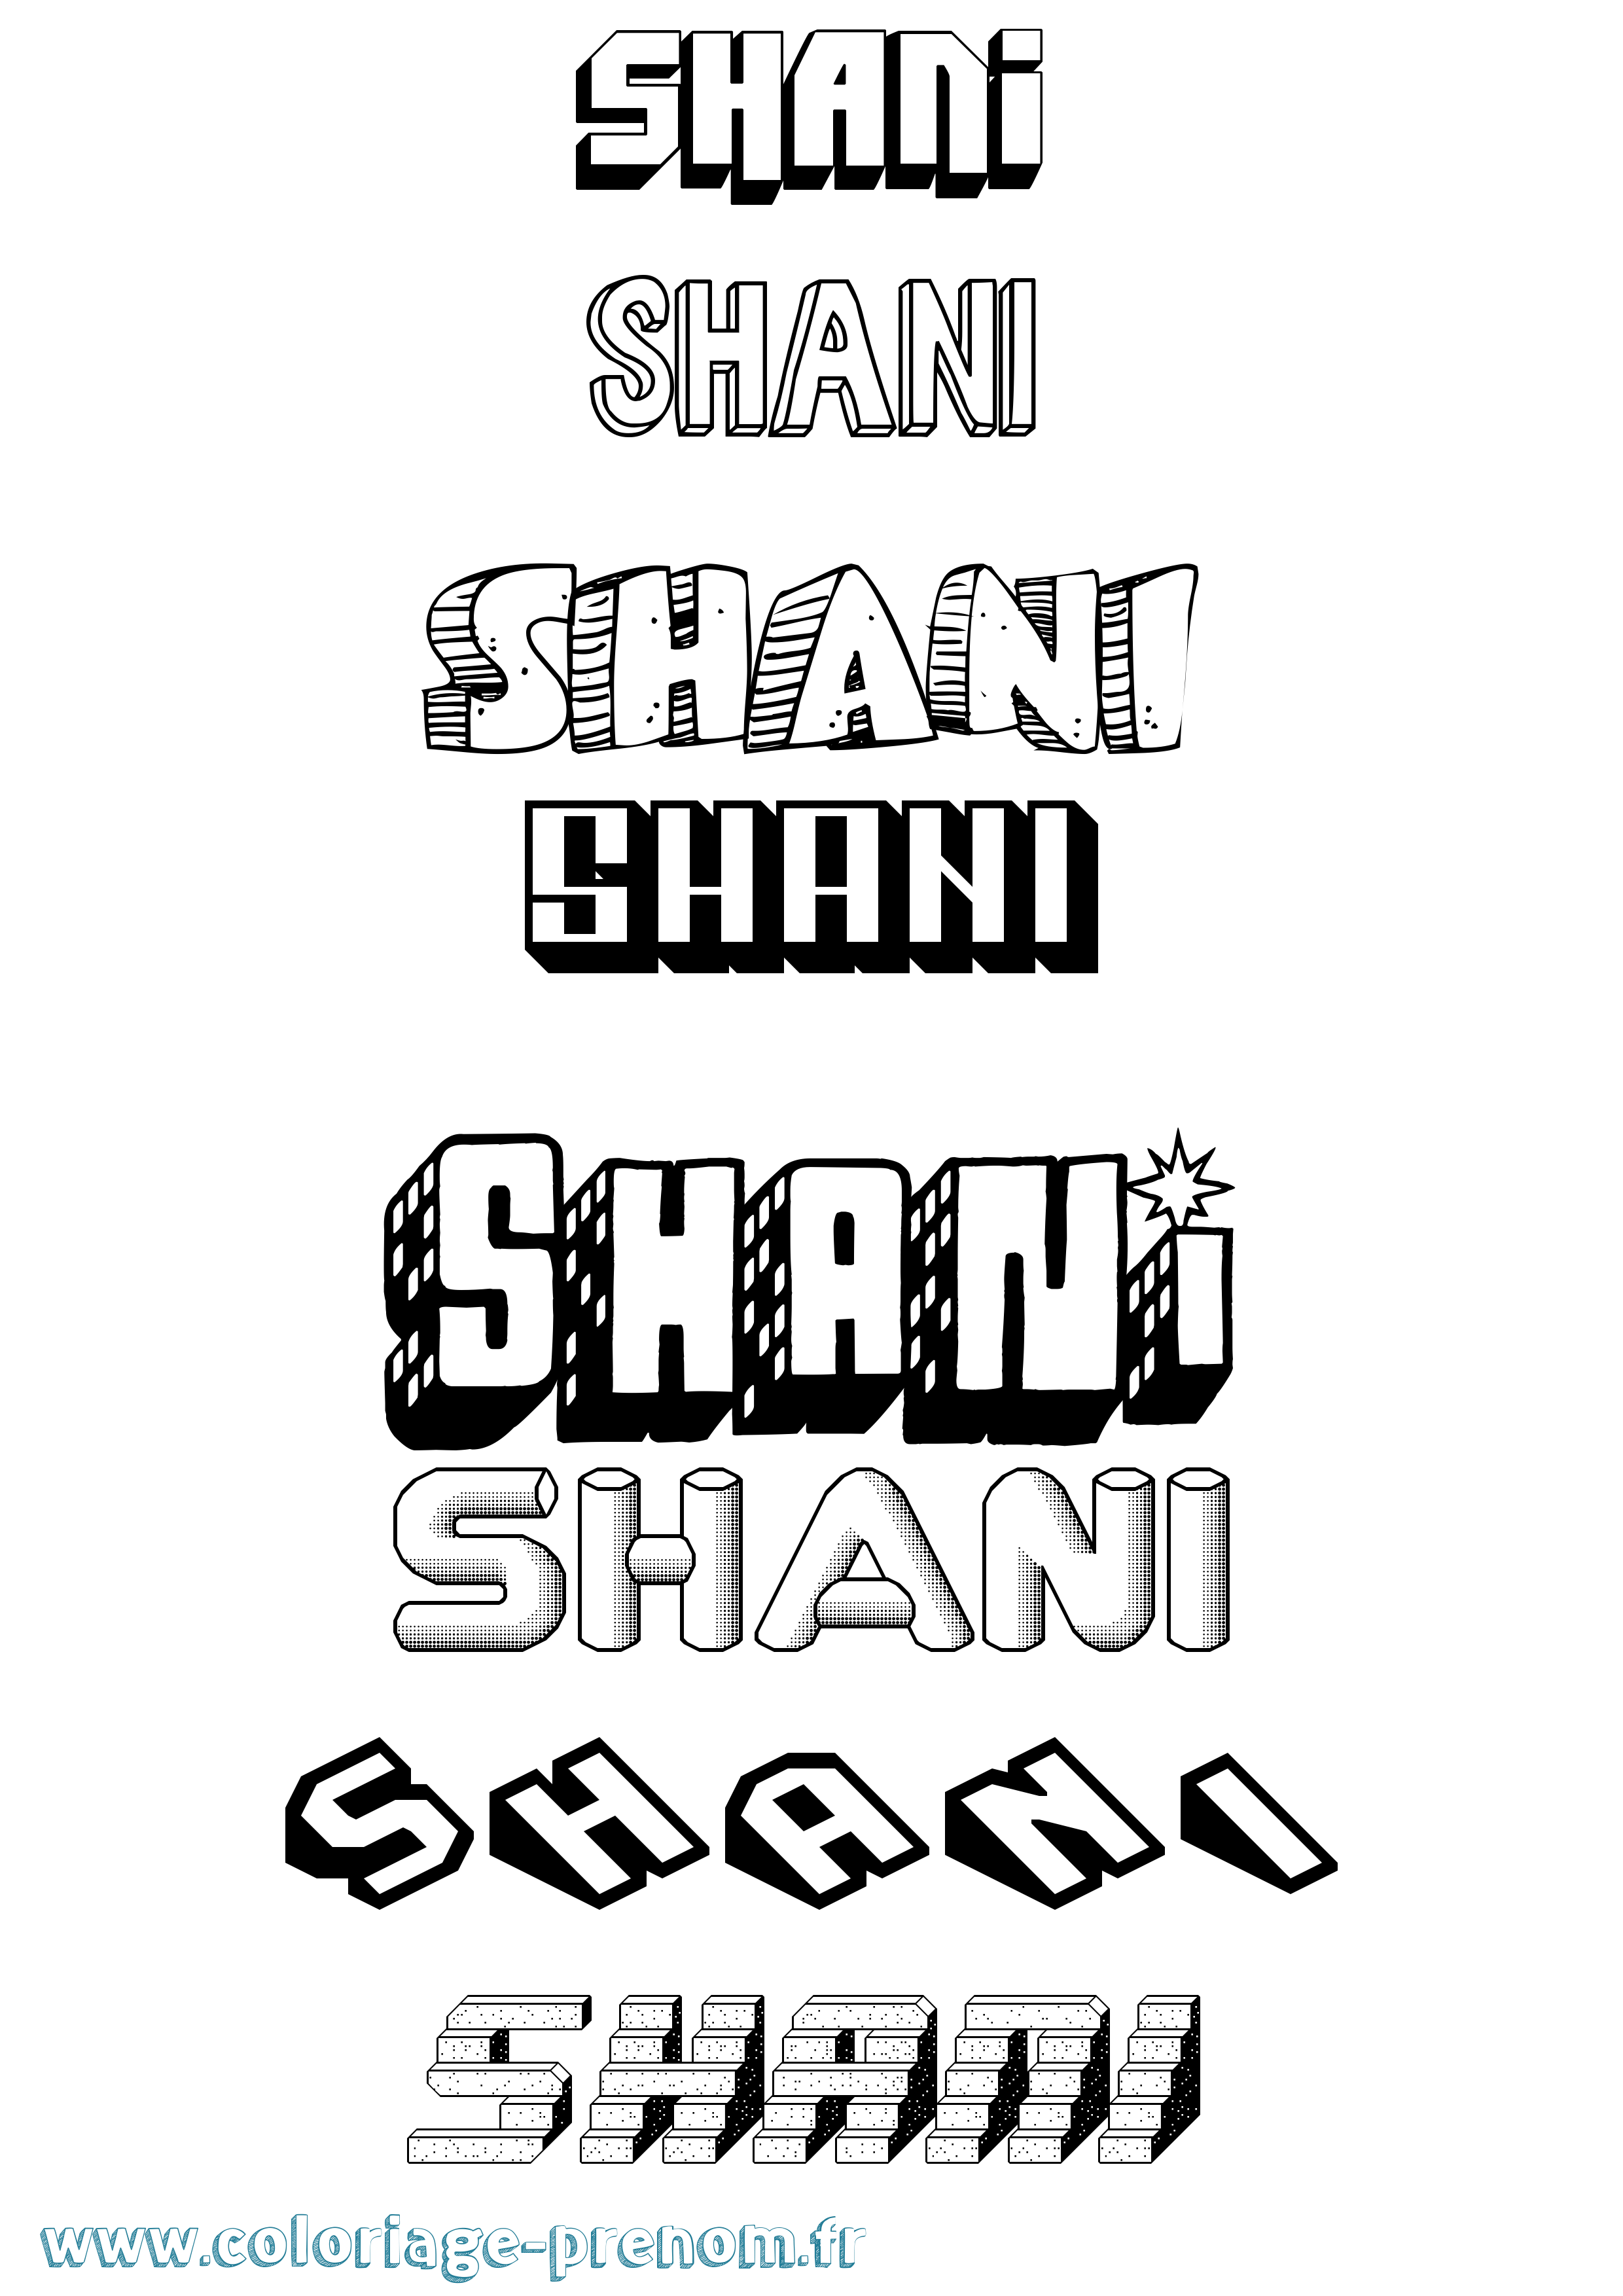 Coloriage prénom Shani